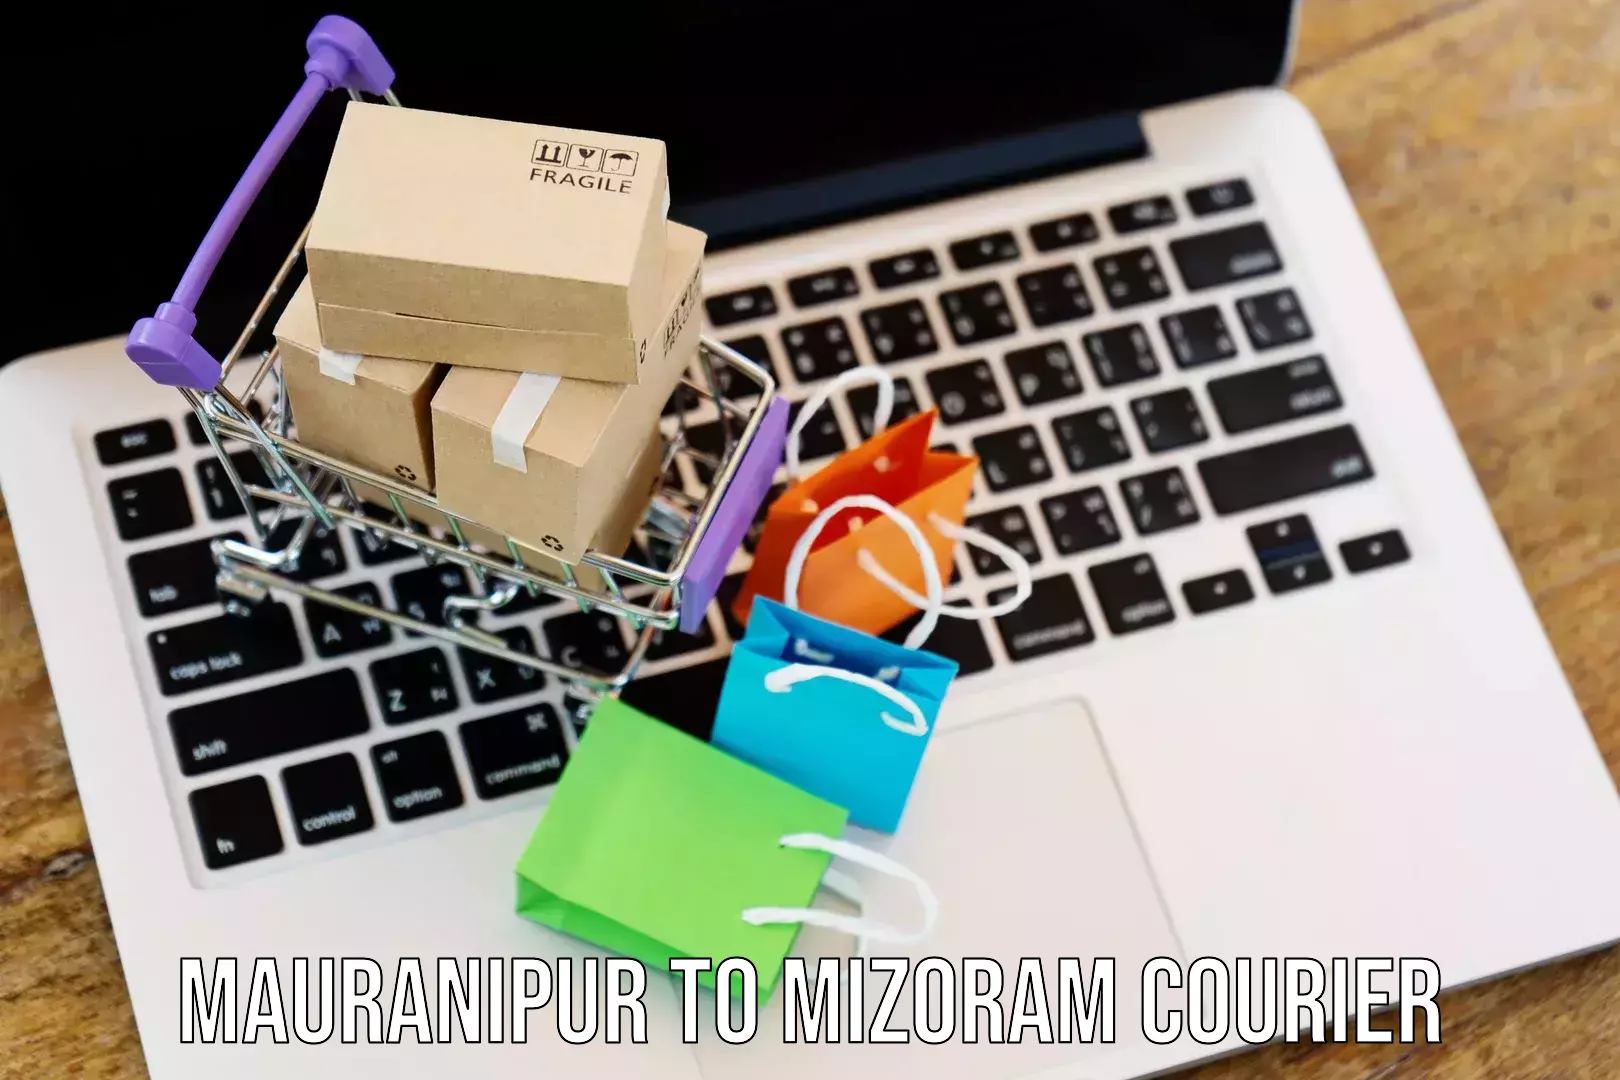 Enhanced tracking features Mauranipur to Mizoram